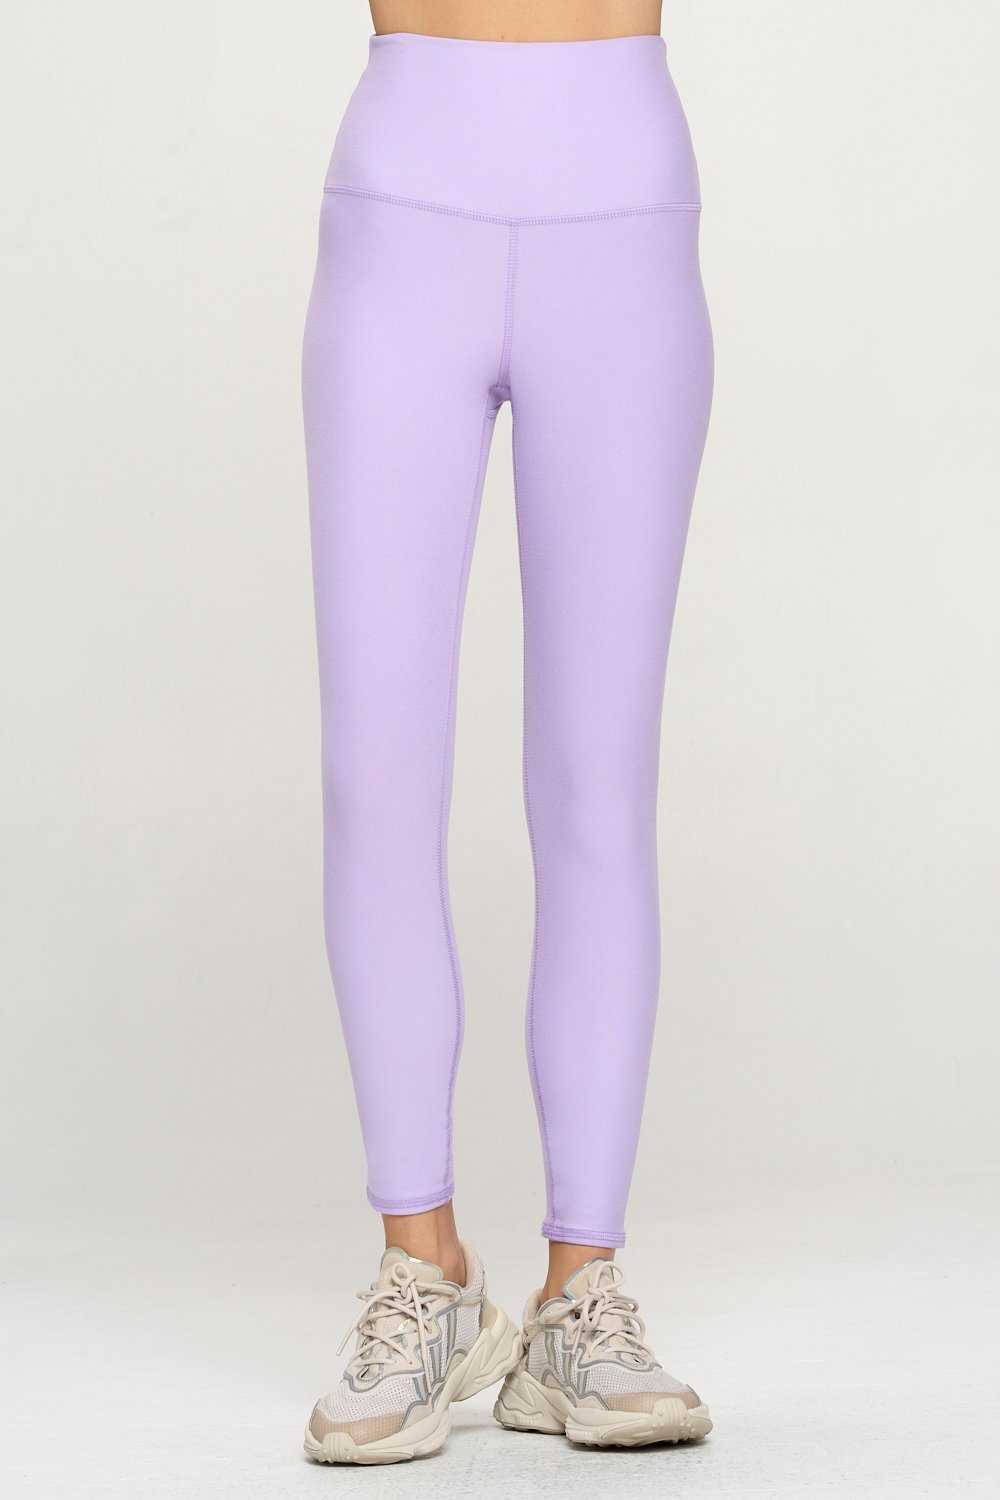 Mia - Purple Rain 7/8 (High-Waist) - LIMITED EDITION Activewear